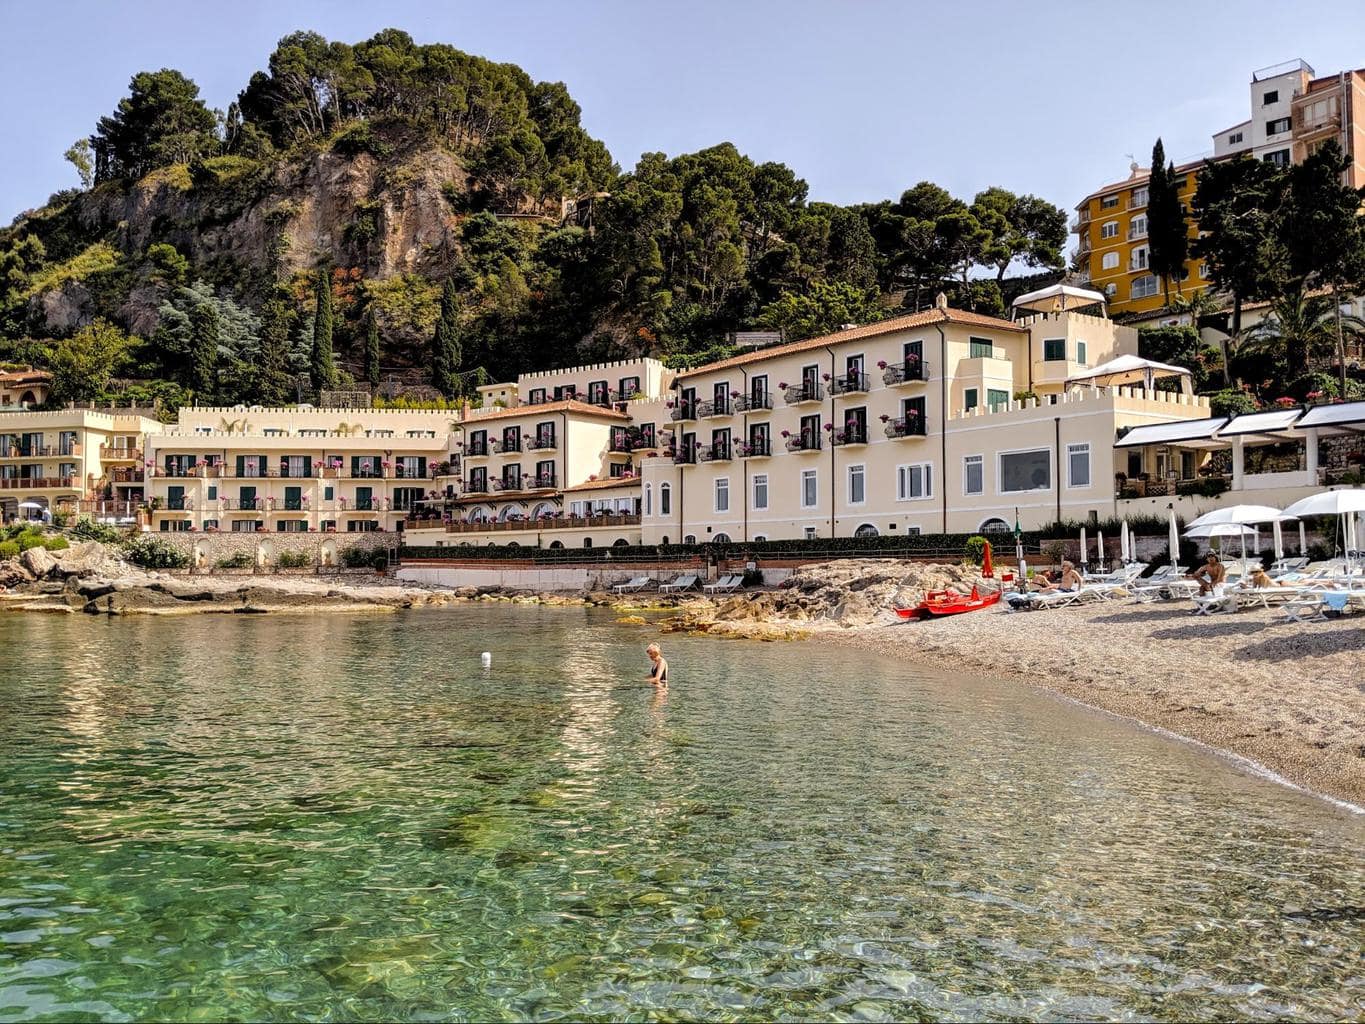 Belmond Villa Sant'Andrea: Luxury Hotel in Sicily